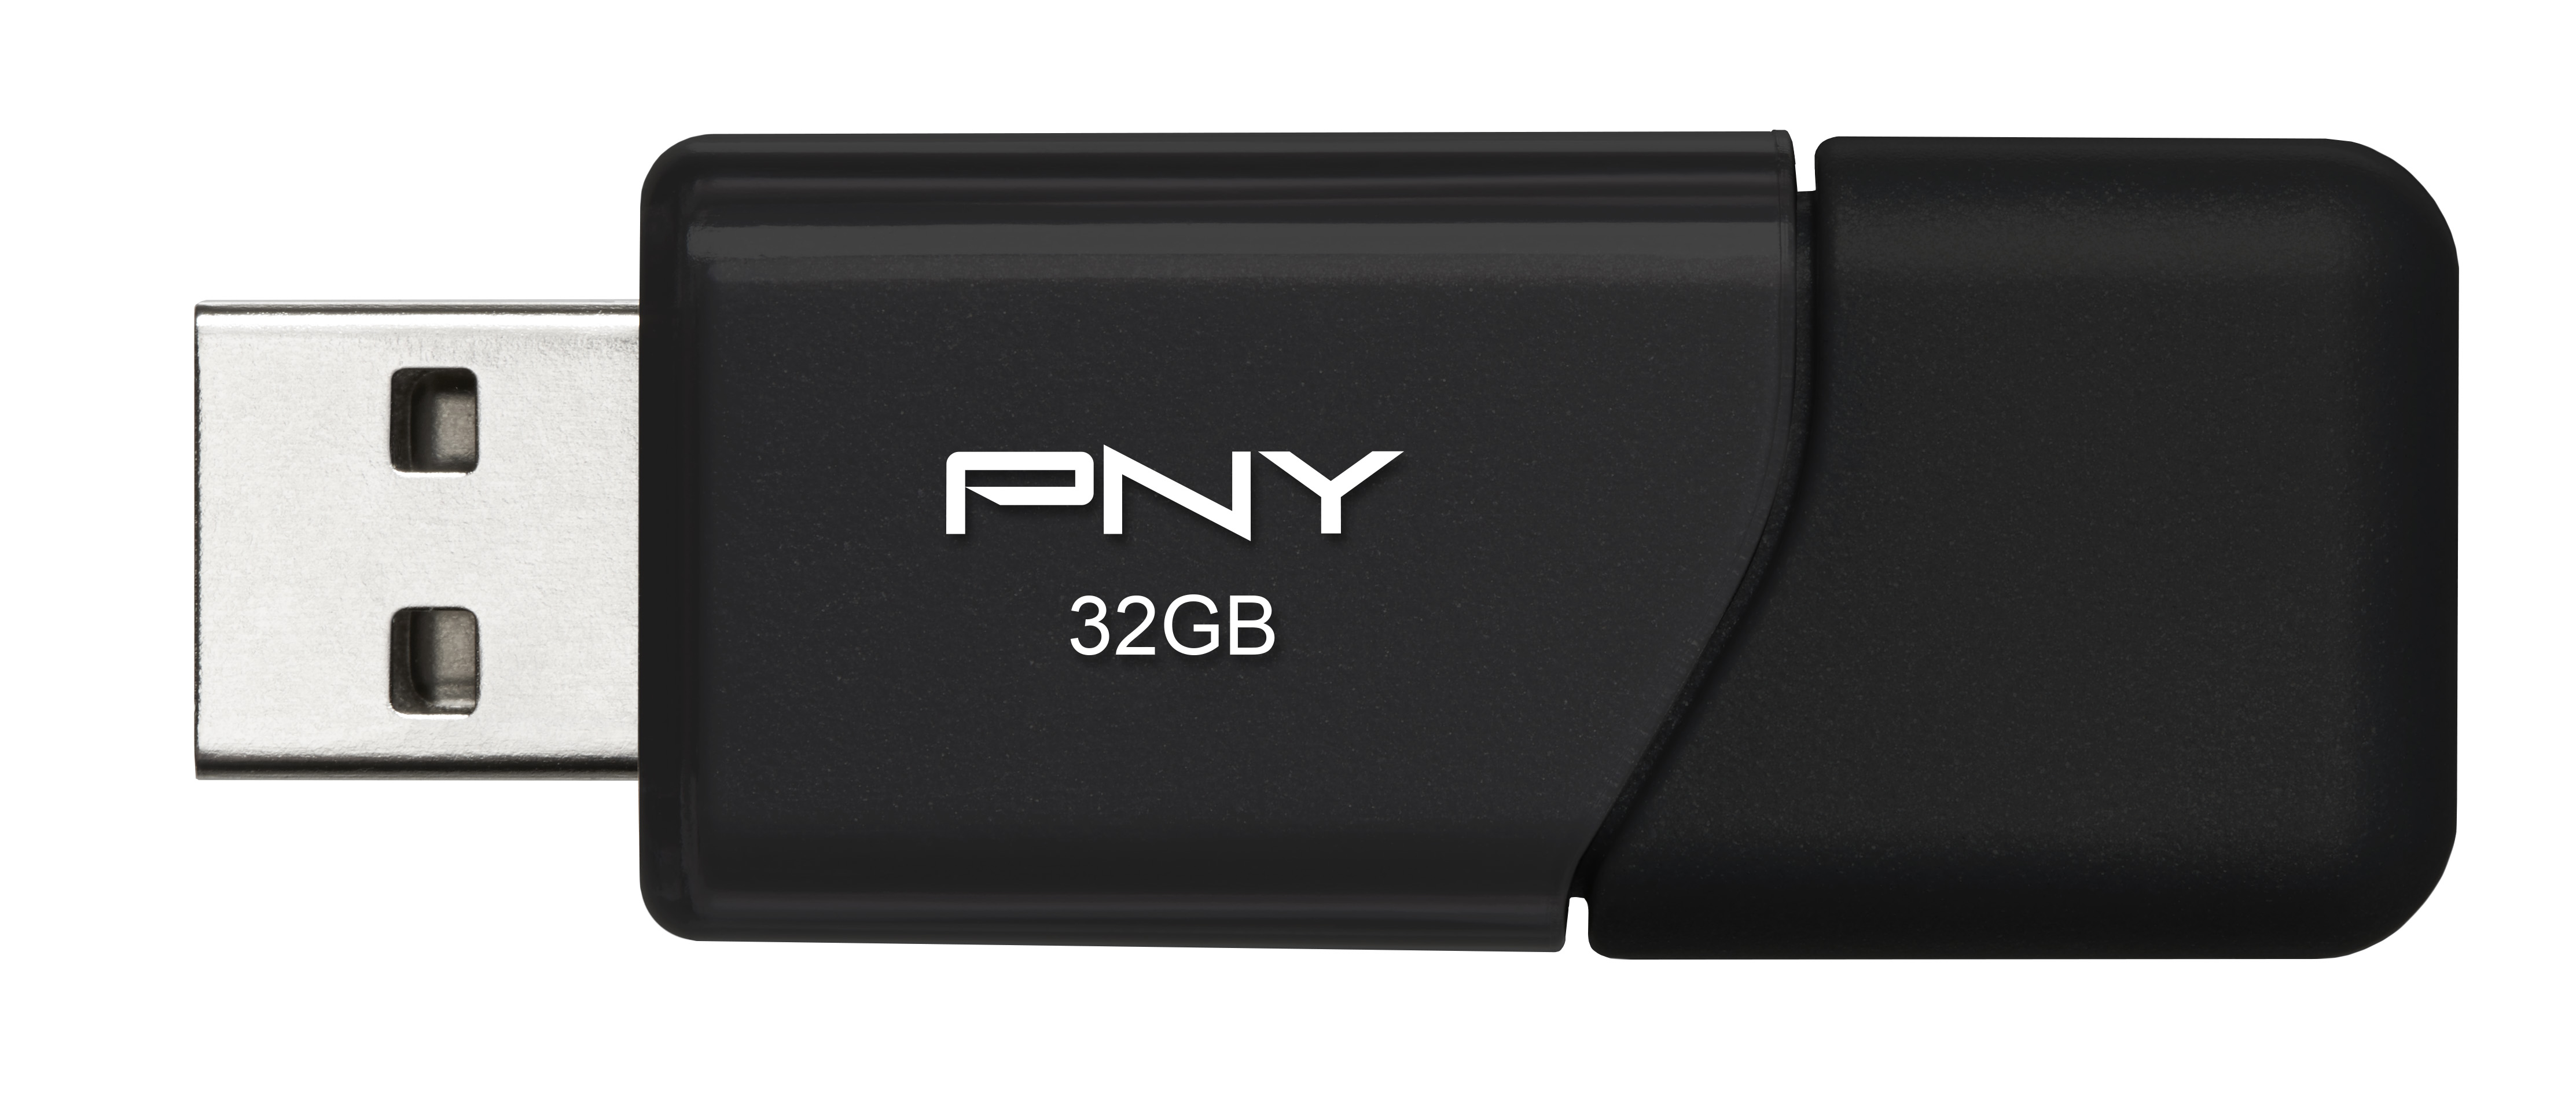 PNY 32GB Attache USB 2.0 Flash Drive - P-FD32GATT03-GE - image 2 of 6